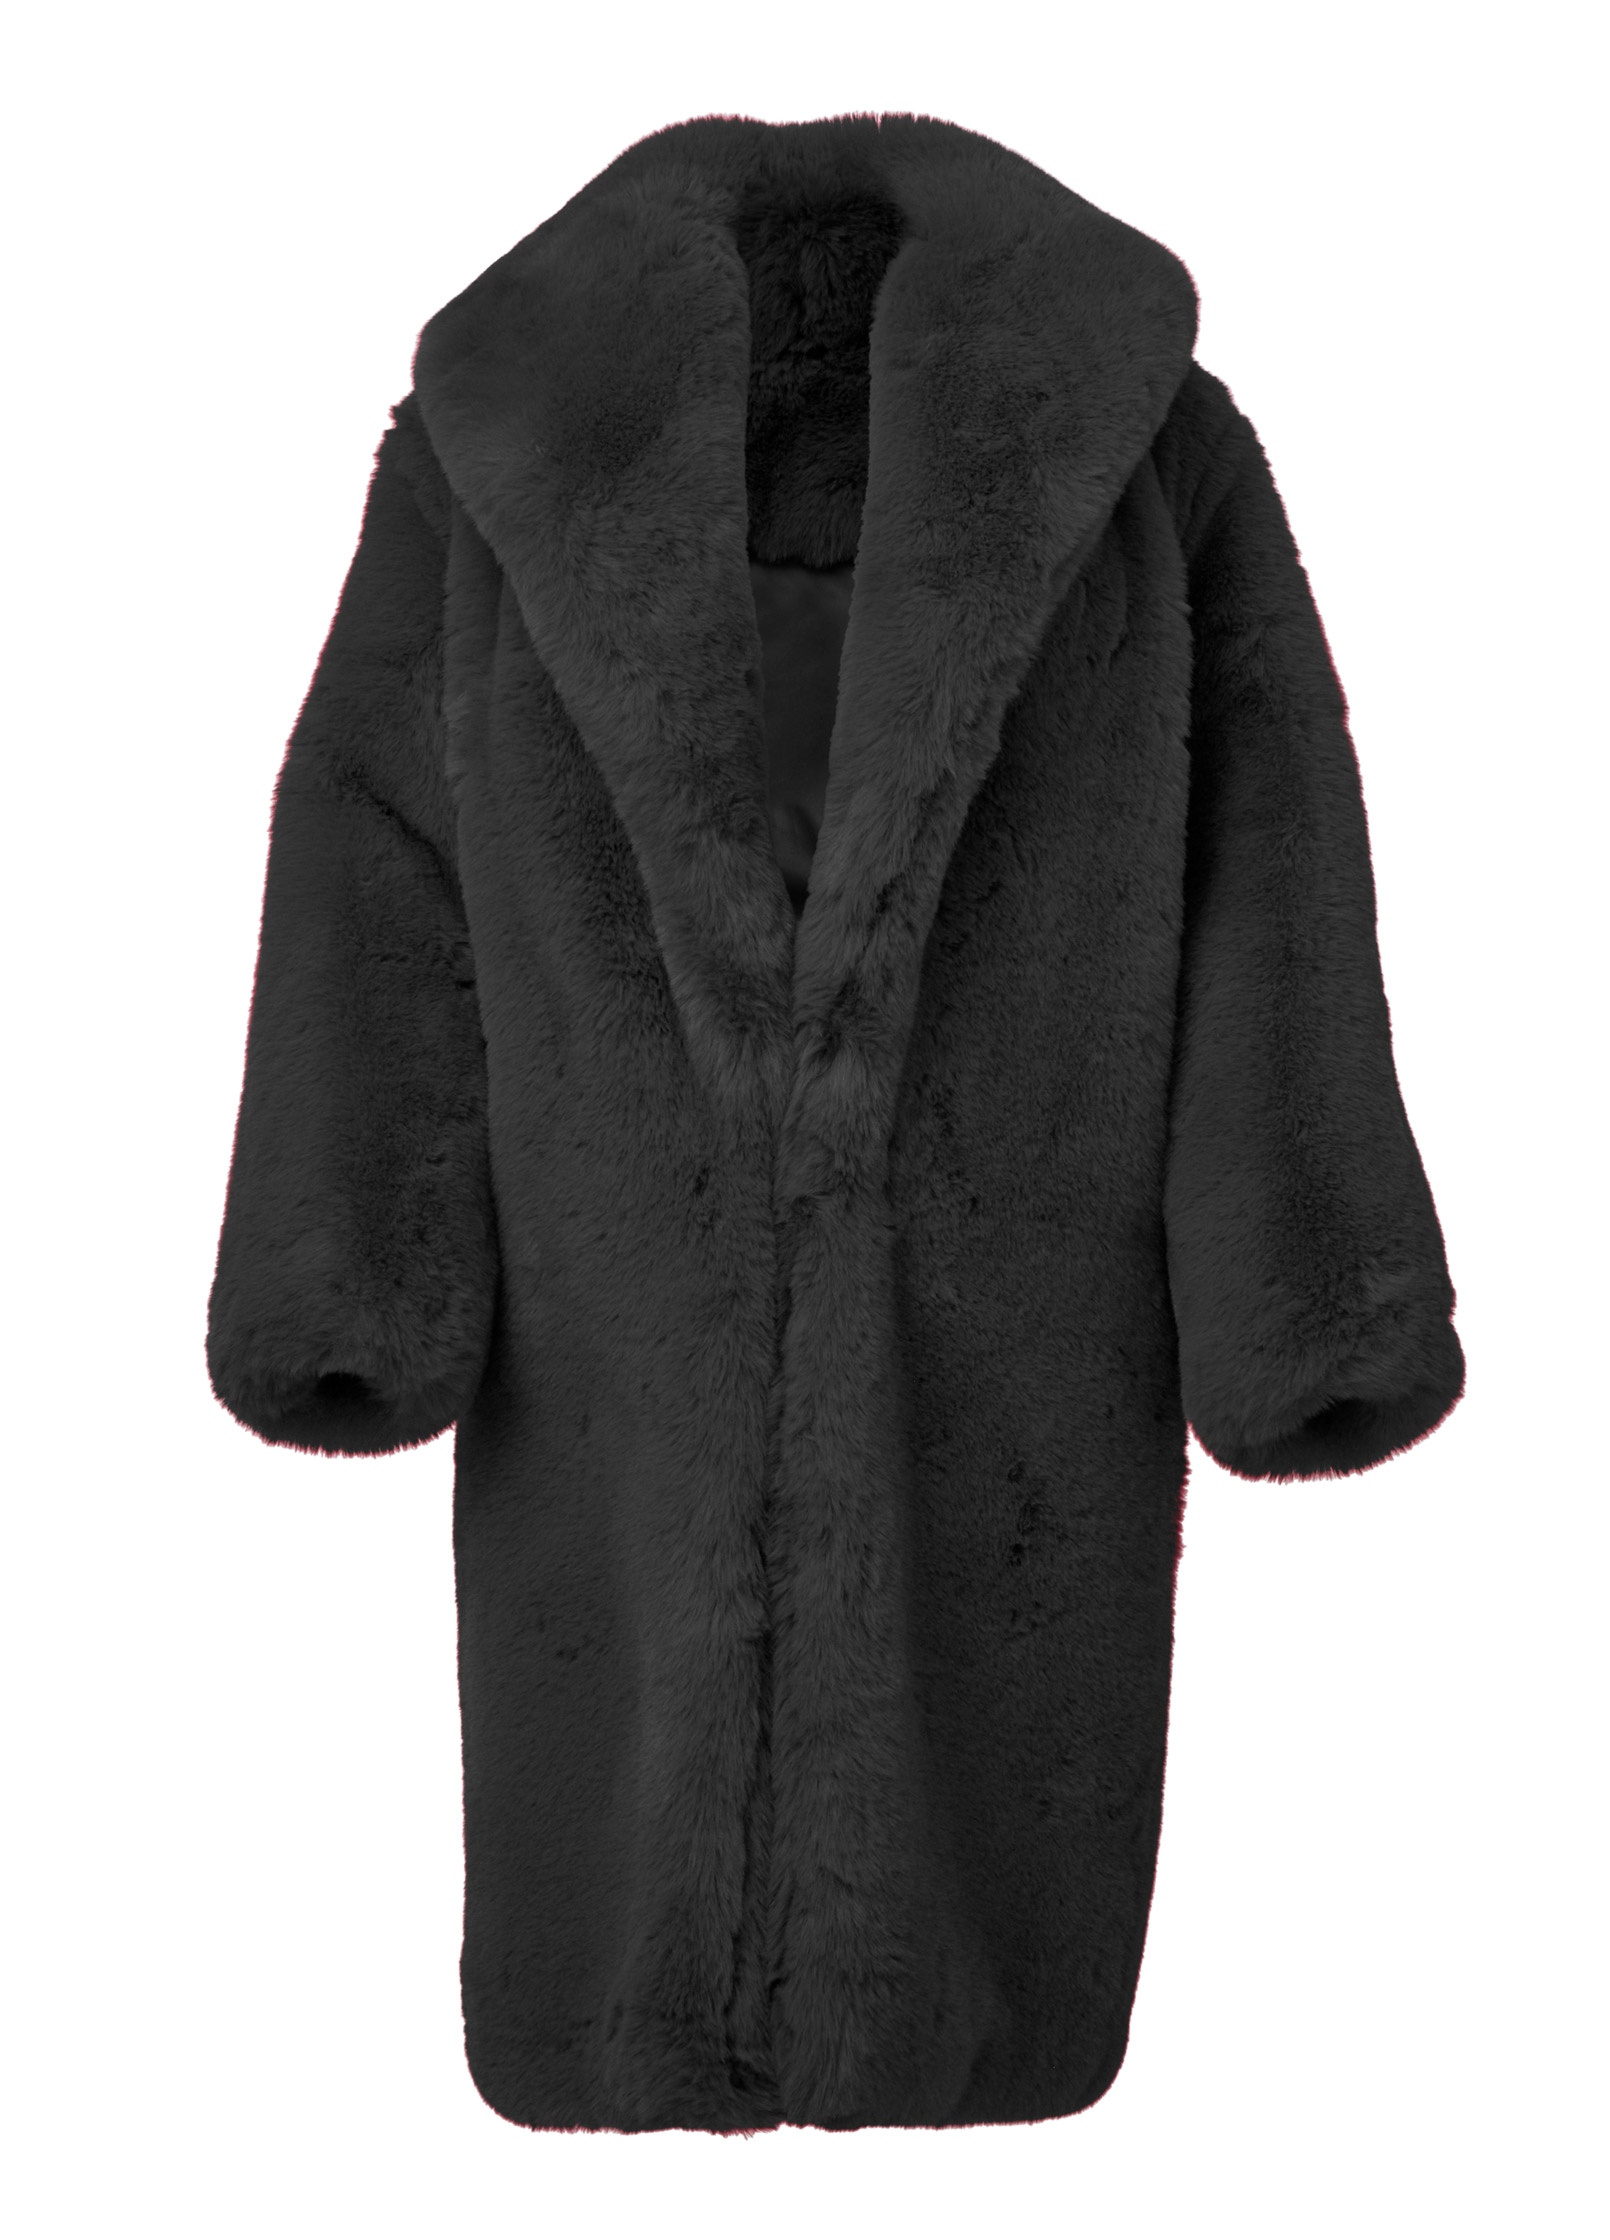 OVERSIZED FAUX FUR COAT in Black | VENUS